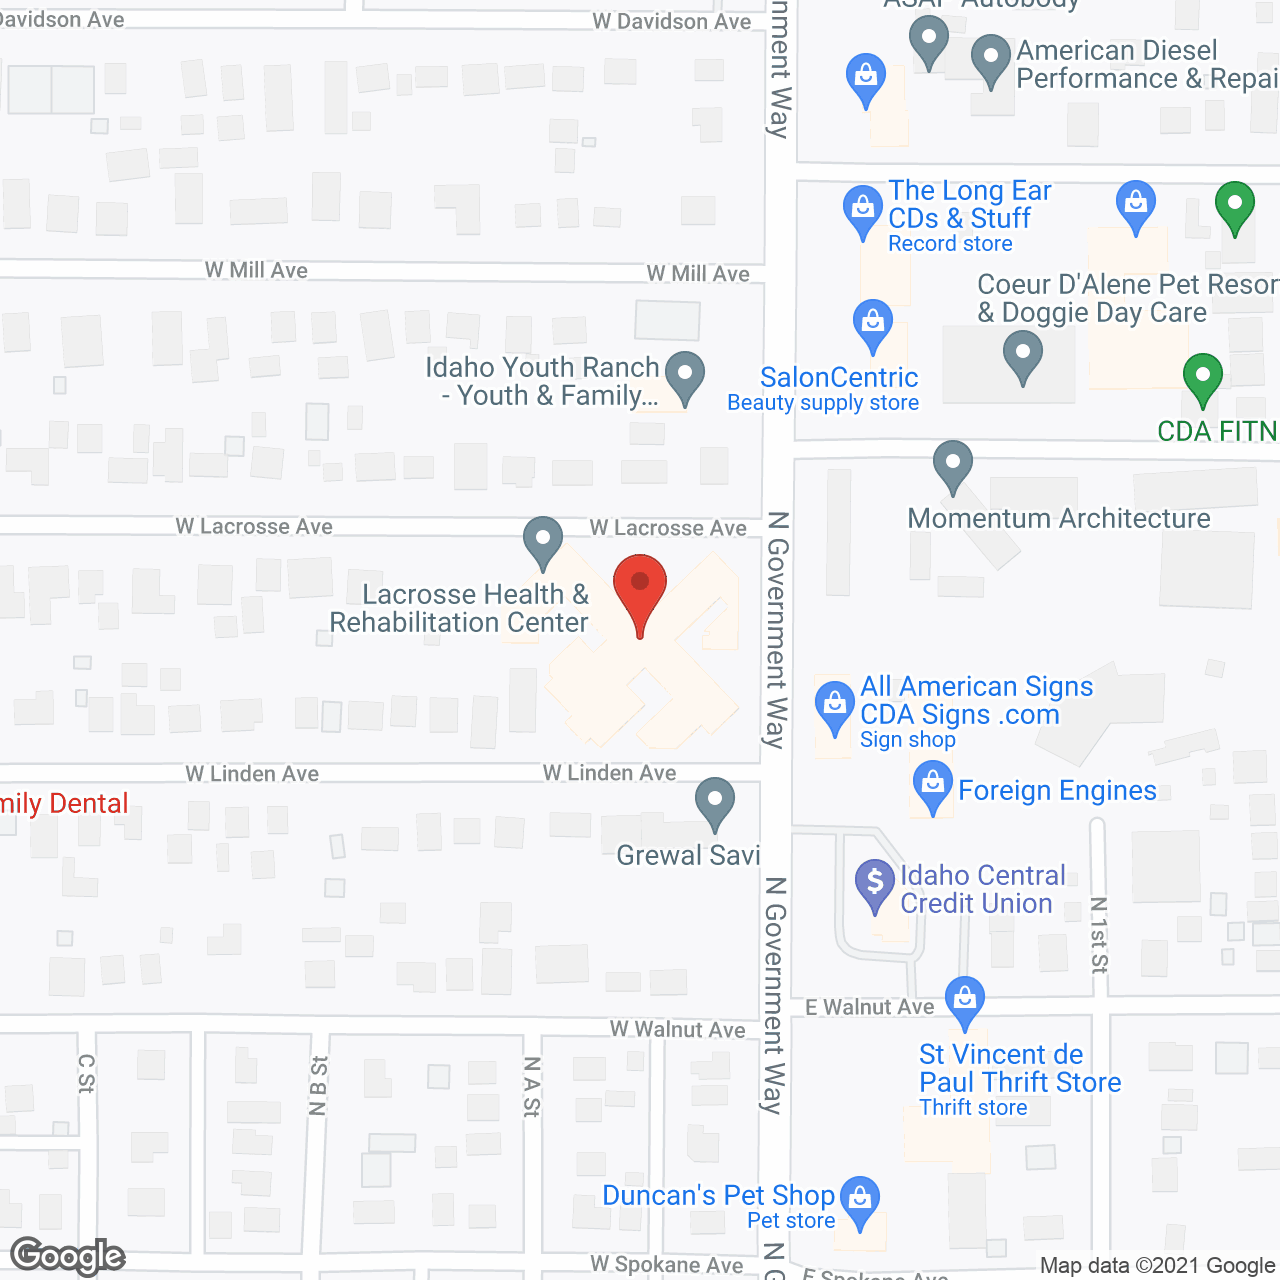 Lacrosse Health & Rehab Center in google map